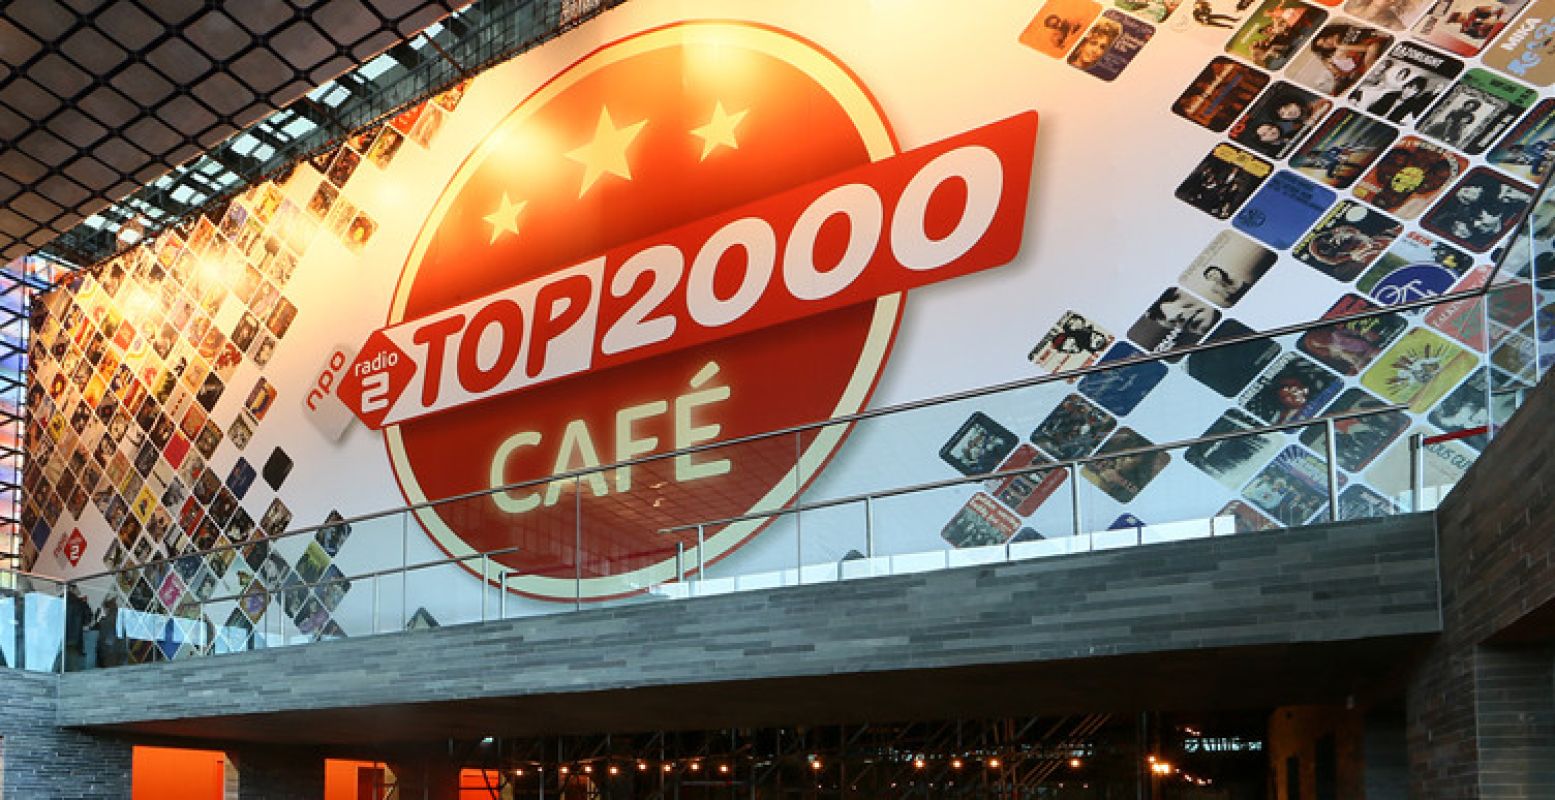 Vanaf kerst tot nieuwsjaarsdag is het Top 2000 Café het muzikale middelpunt van Nederland! Foto: Paul Ridderhof.